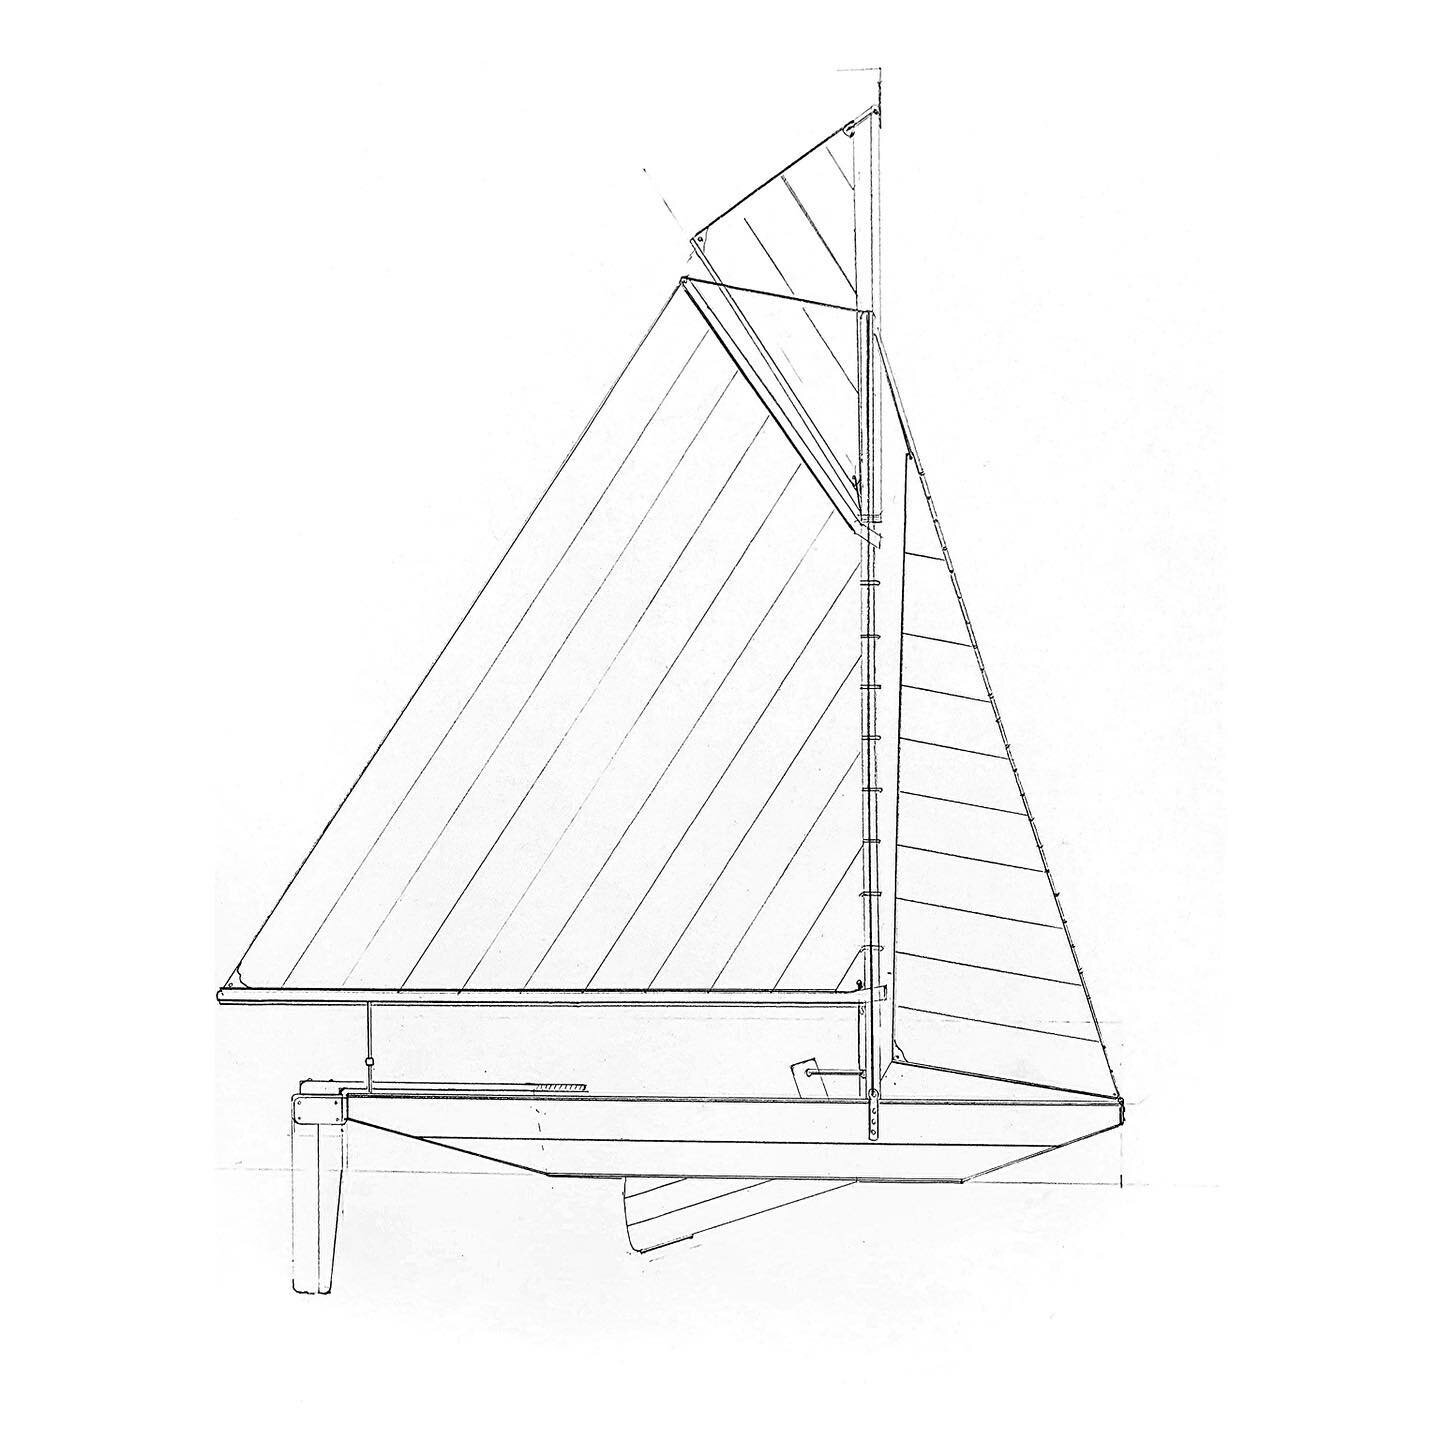 Designing an ambitious sail plan.